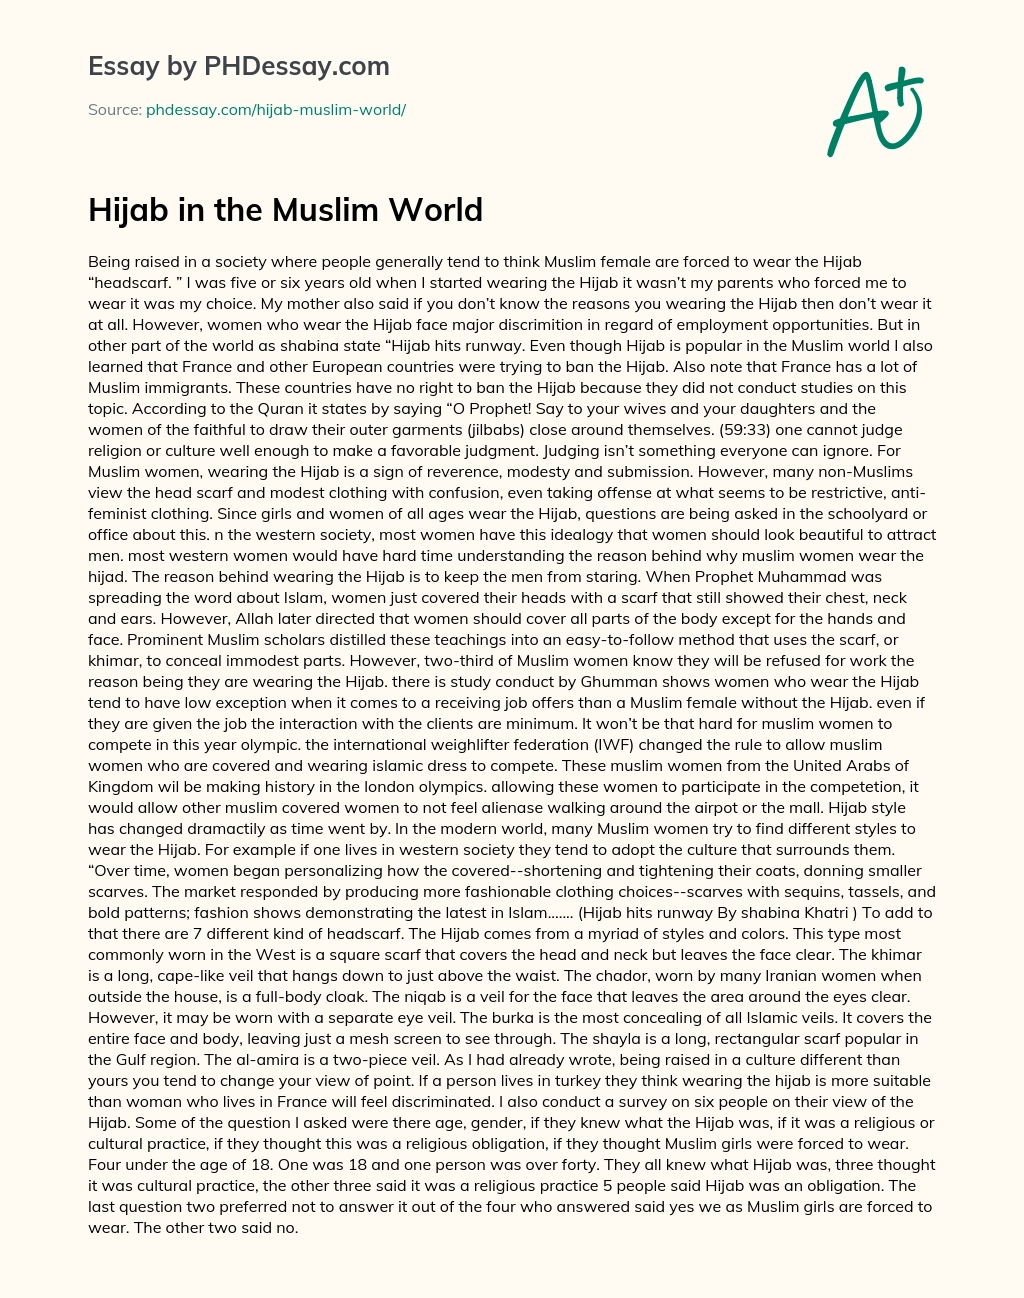 Hijab in the Muslim World essay